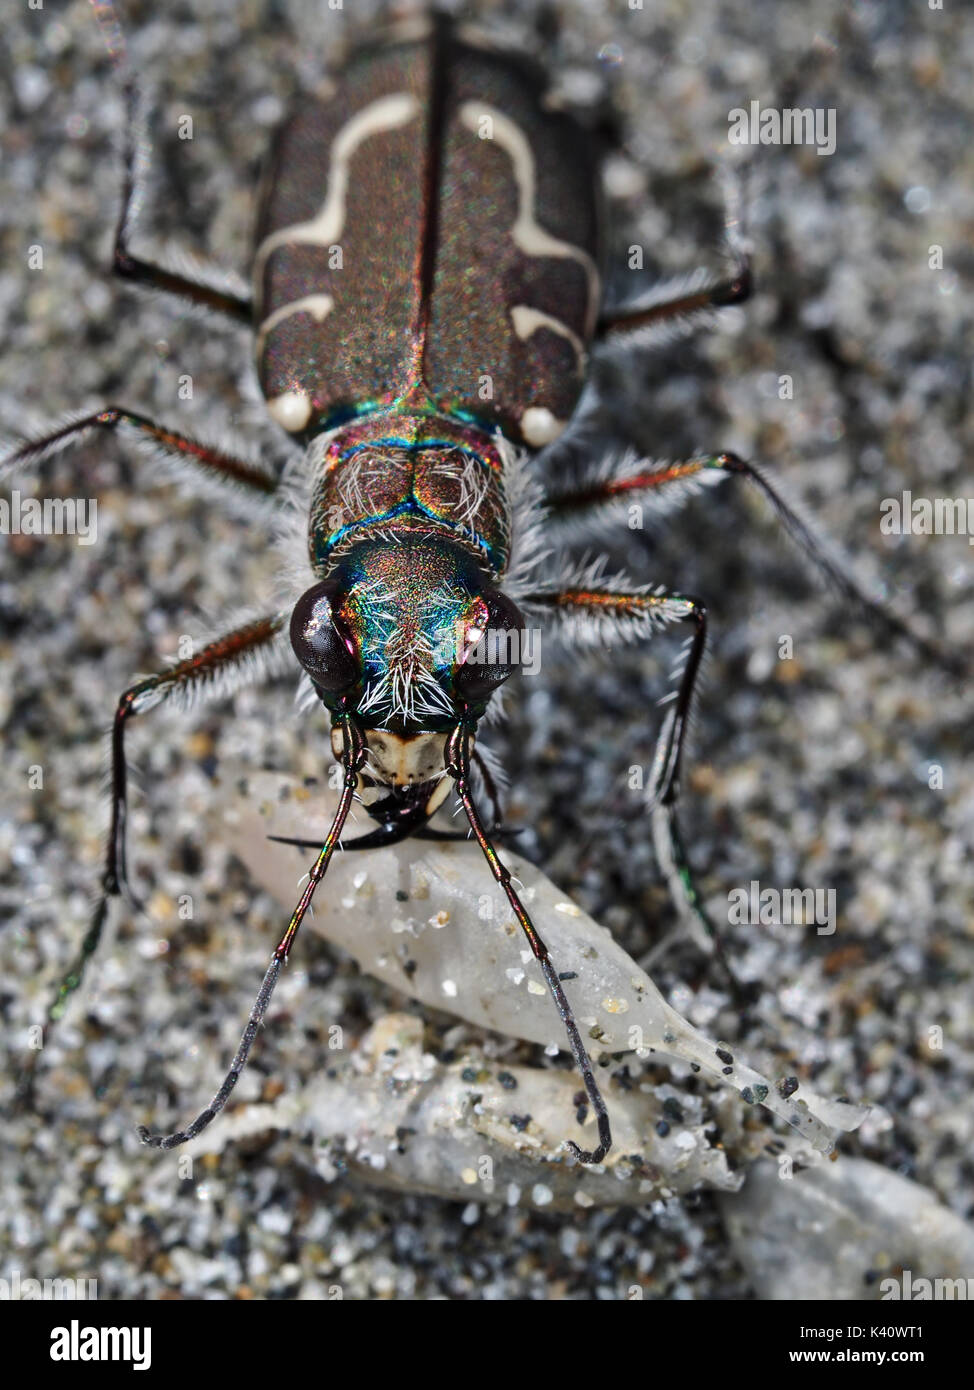 Hairy-necked tiger beetle (Cicindela hirticollis) at a sandy beach in Western WA, USA Stock Photo